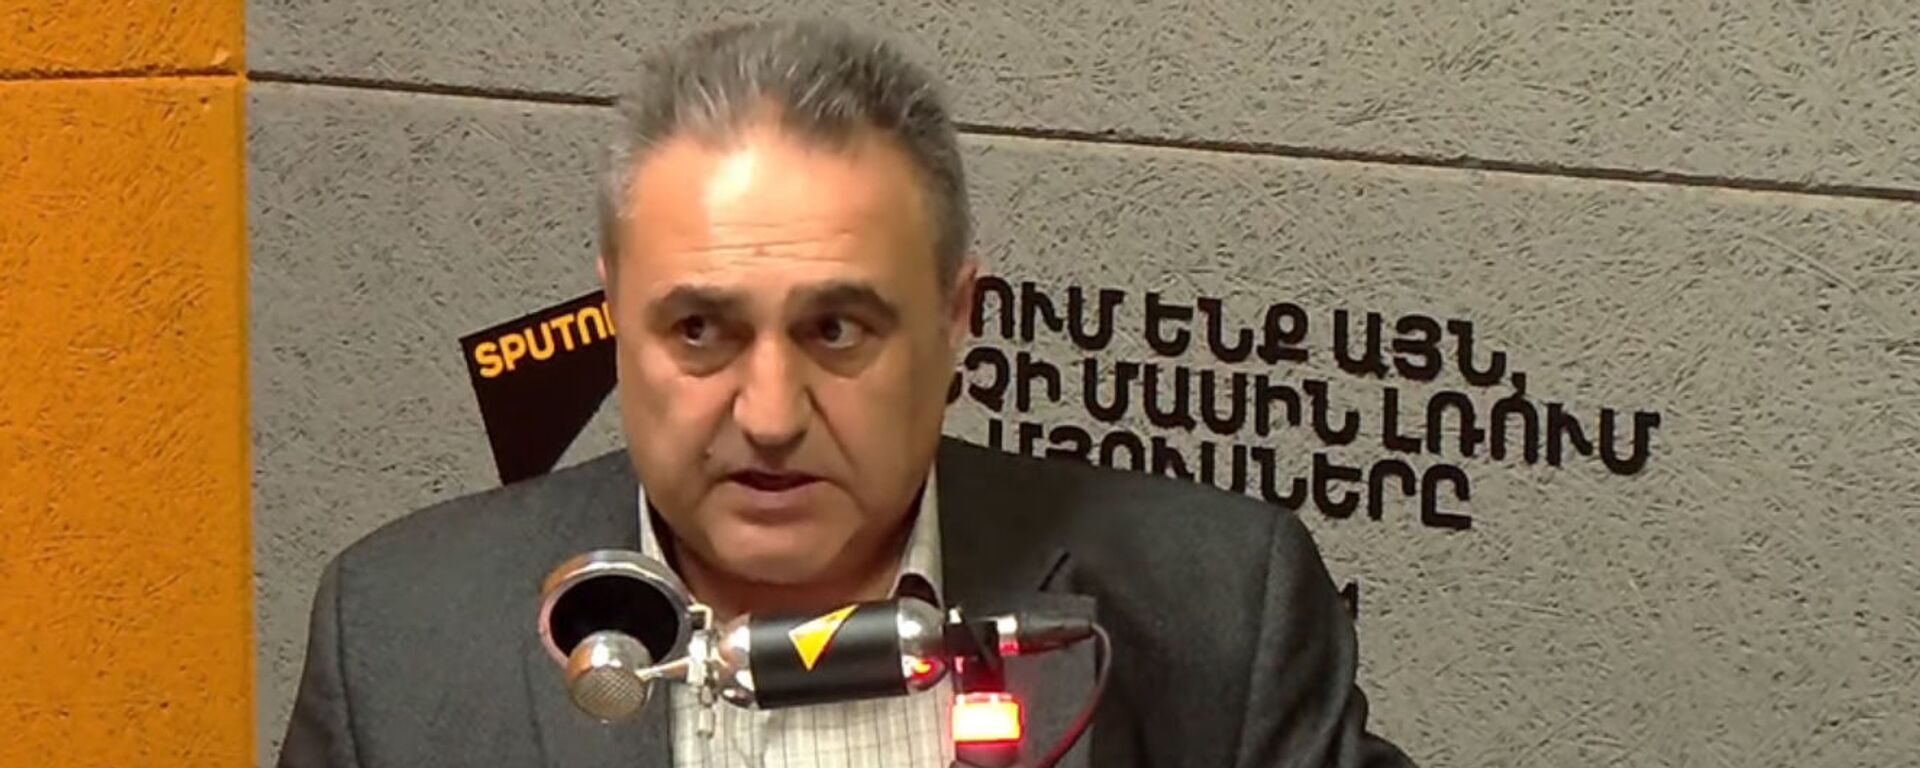 Политолог Армен Багдасарян в гостях радио Sputnik Армения - Sputnik Արմենիա, 1920, 20.05.2021